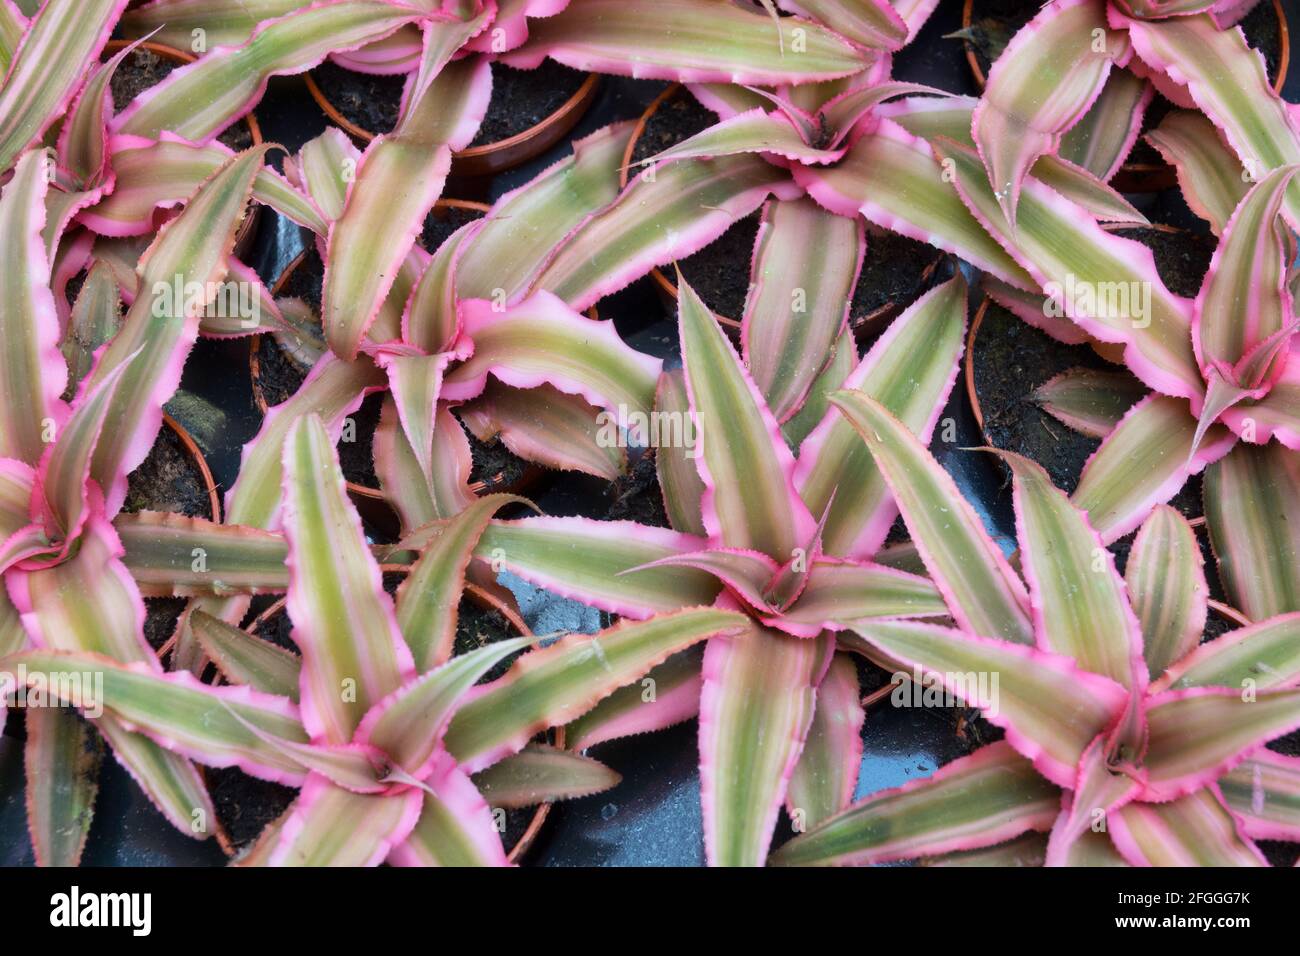 Earth Star Cryptanthus bivittatus young plants Stock Photo